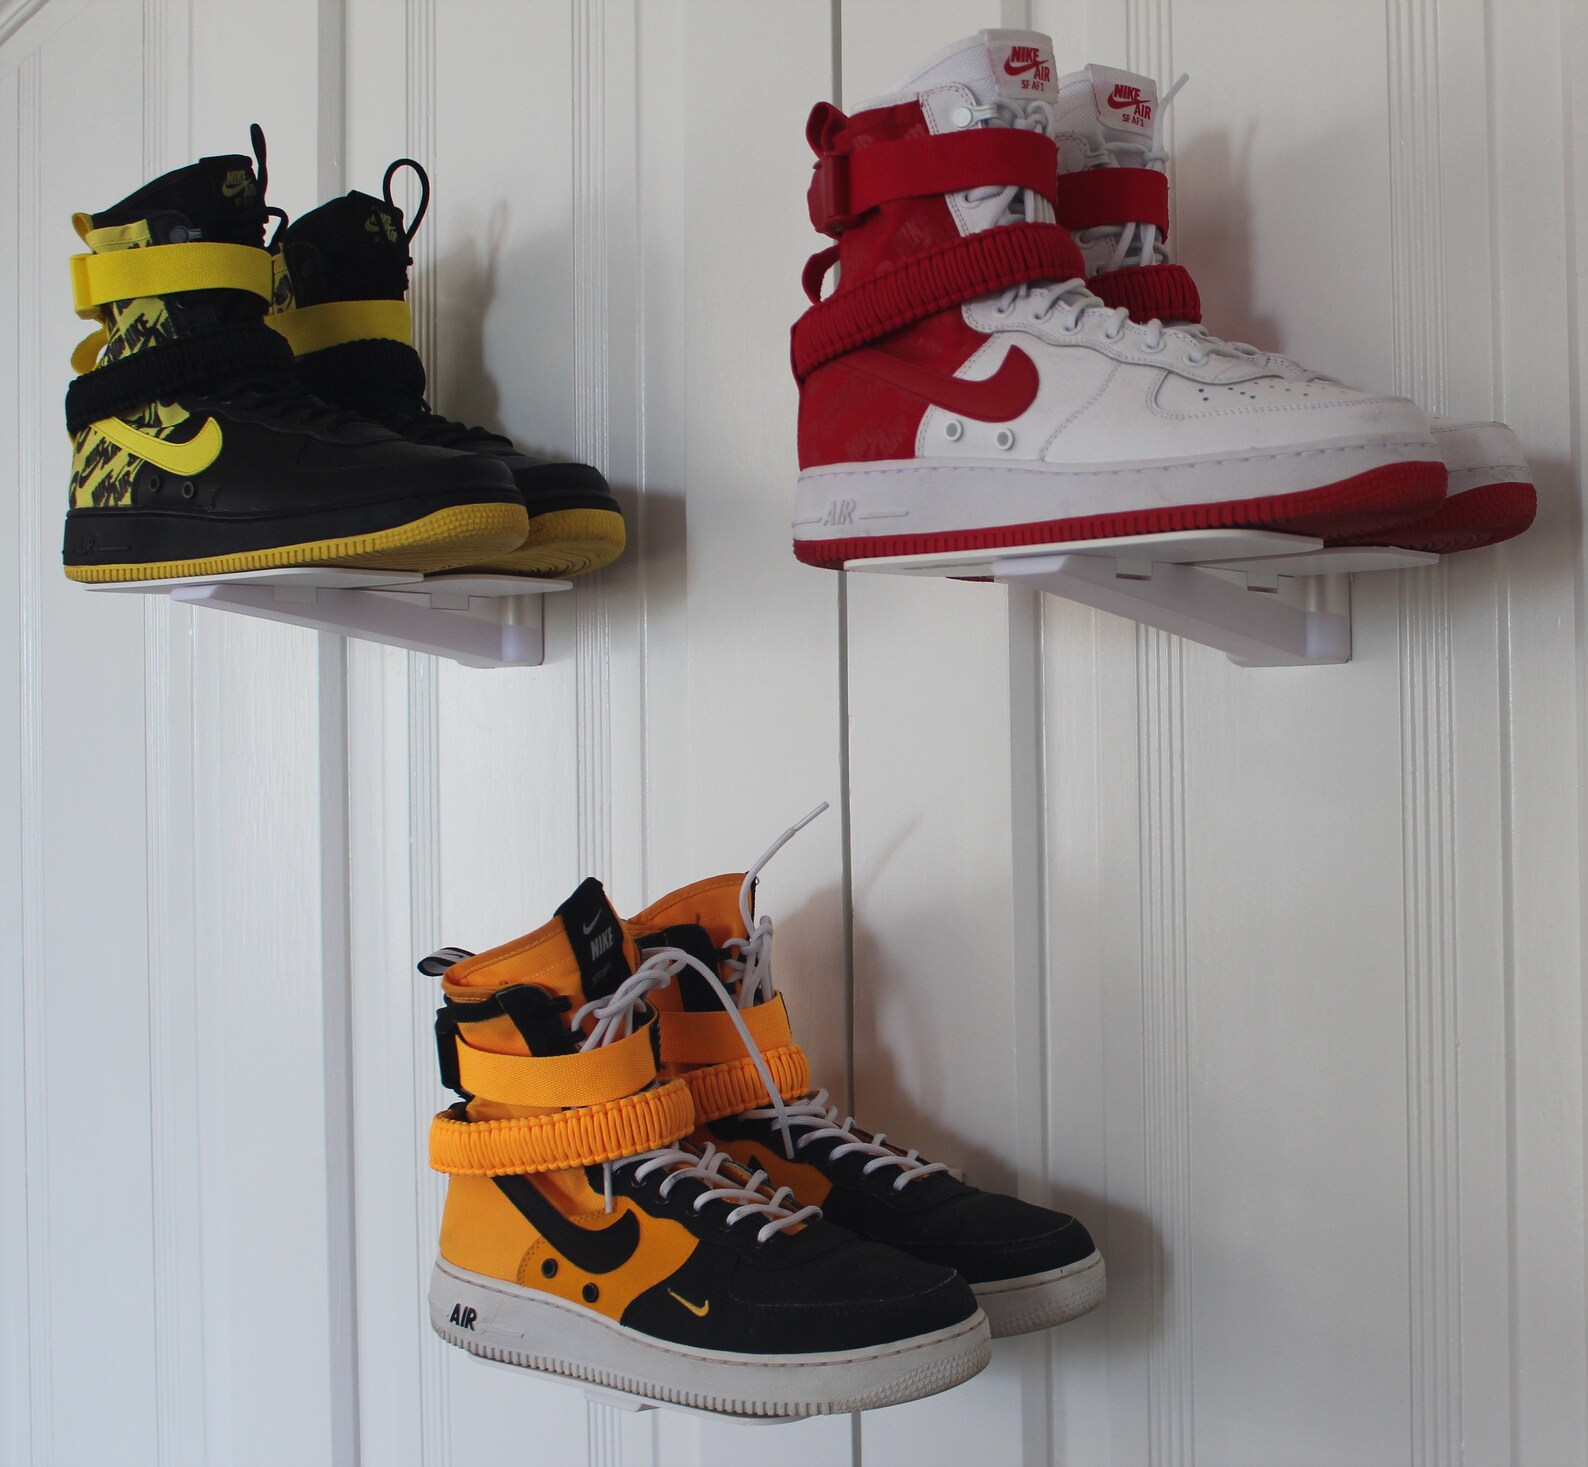 3d Printed 'floating' Sneaker/shoe Display Shelves - Etsy